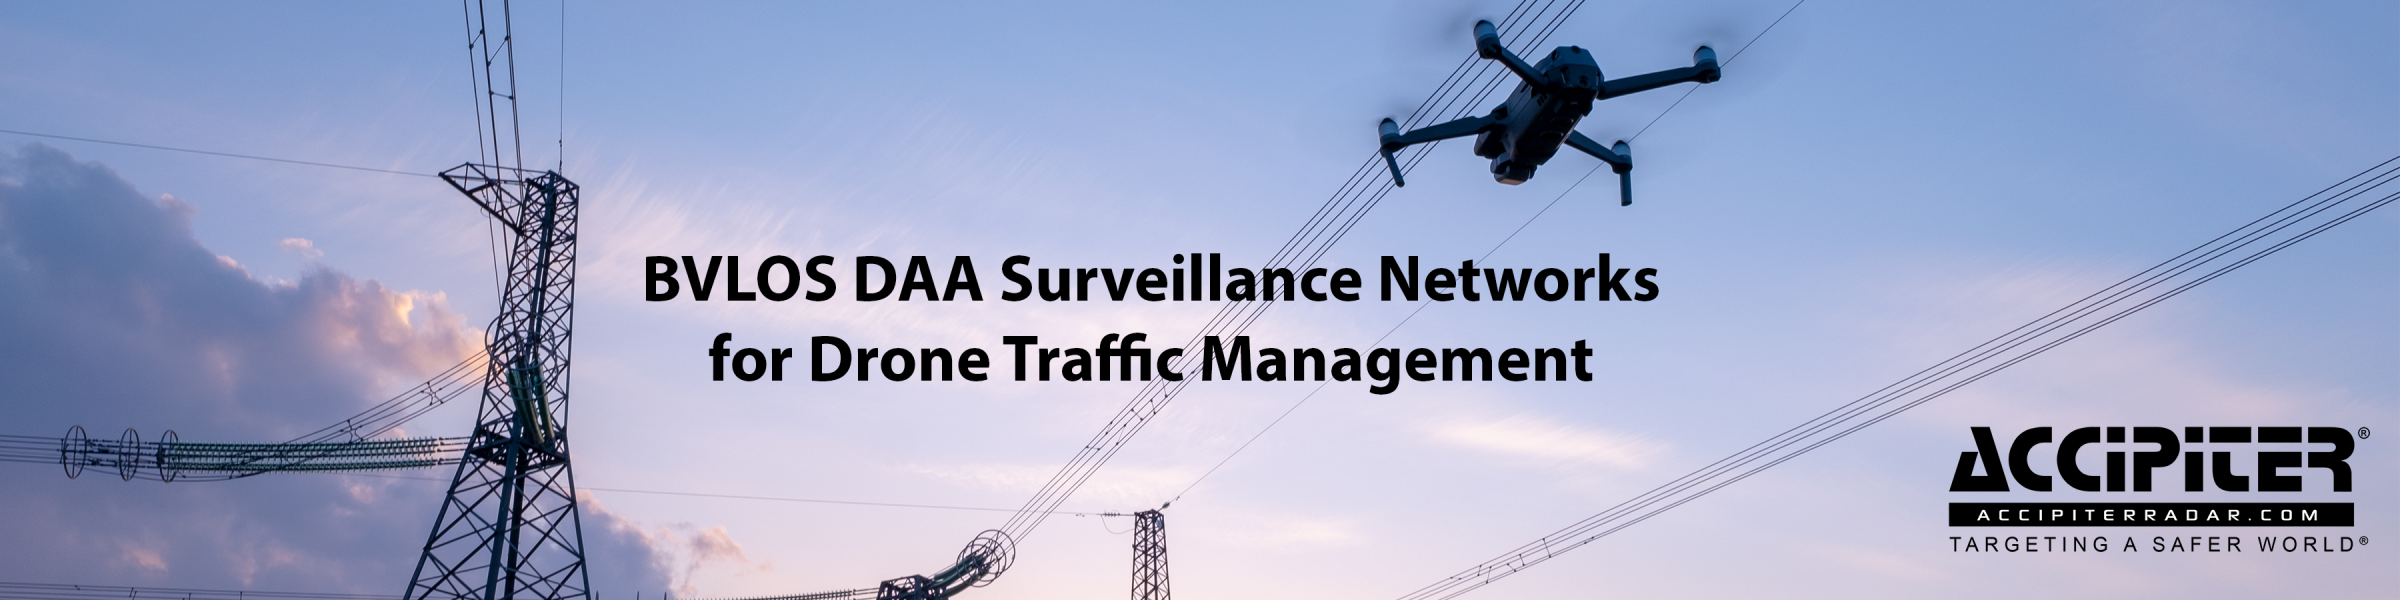 BVLOS DAA Surveillance Networks for Drone Traffic Management